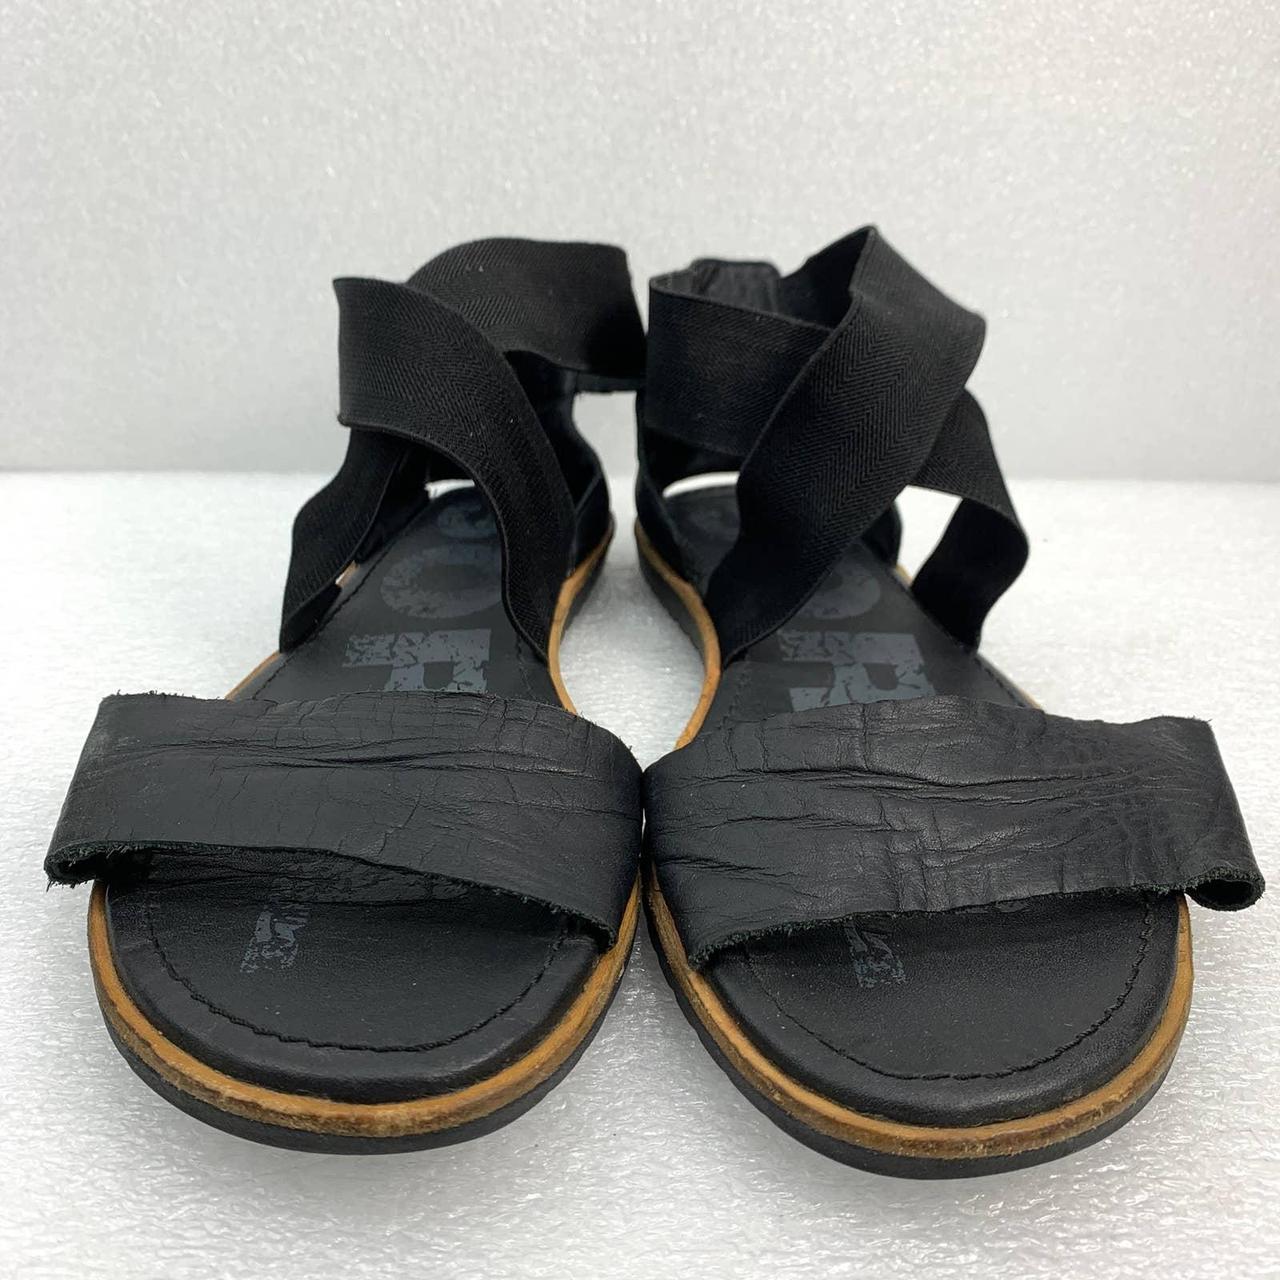 Sorel Women's Black and Tan Sandals (2)